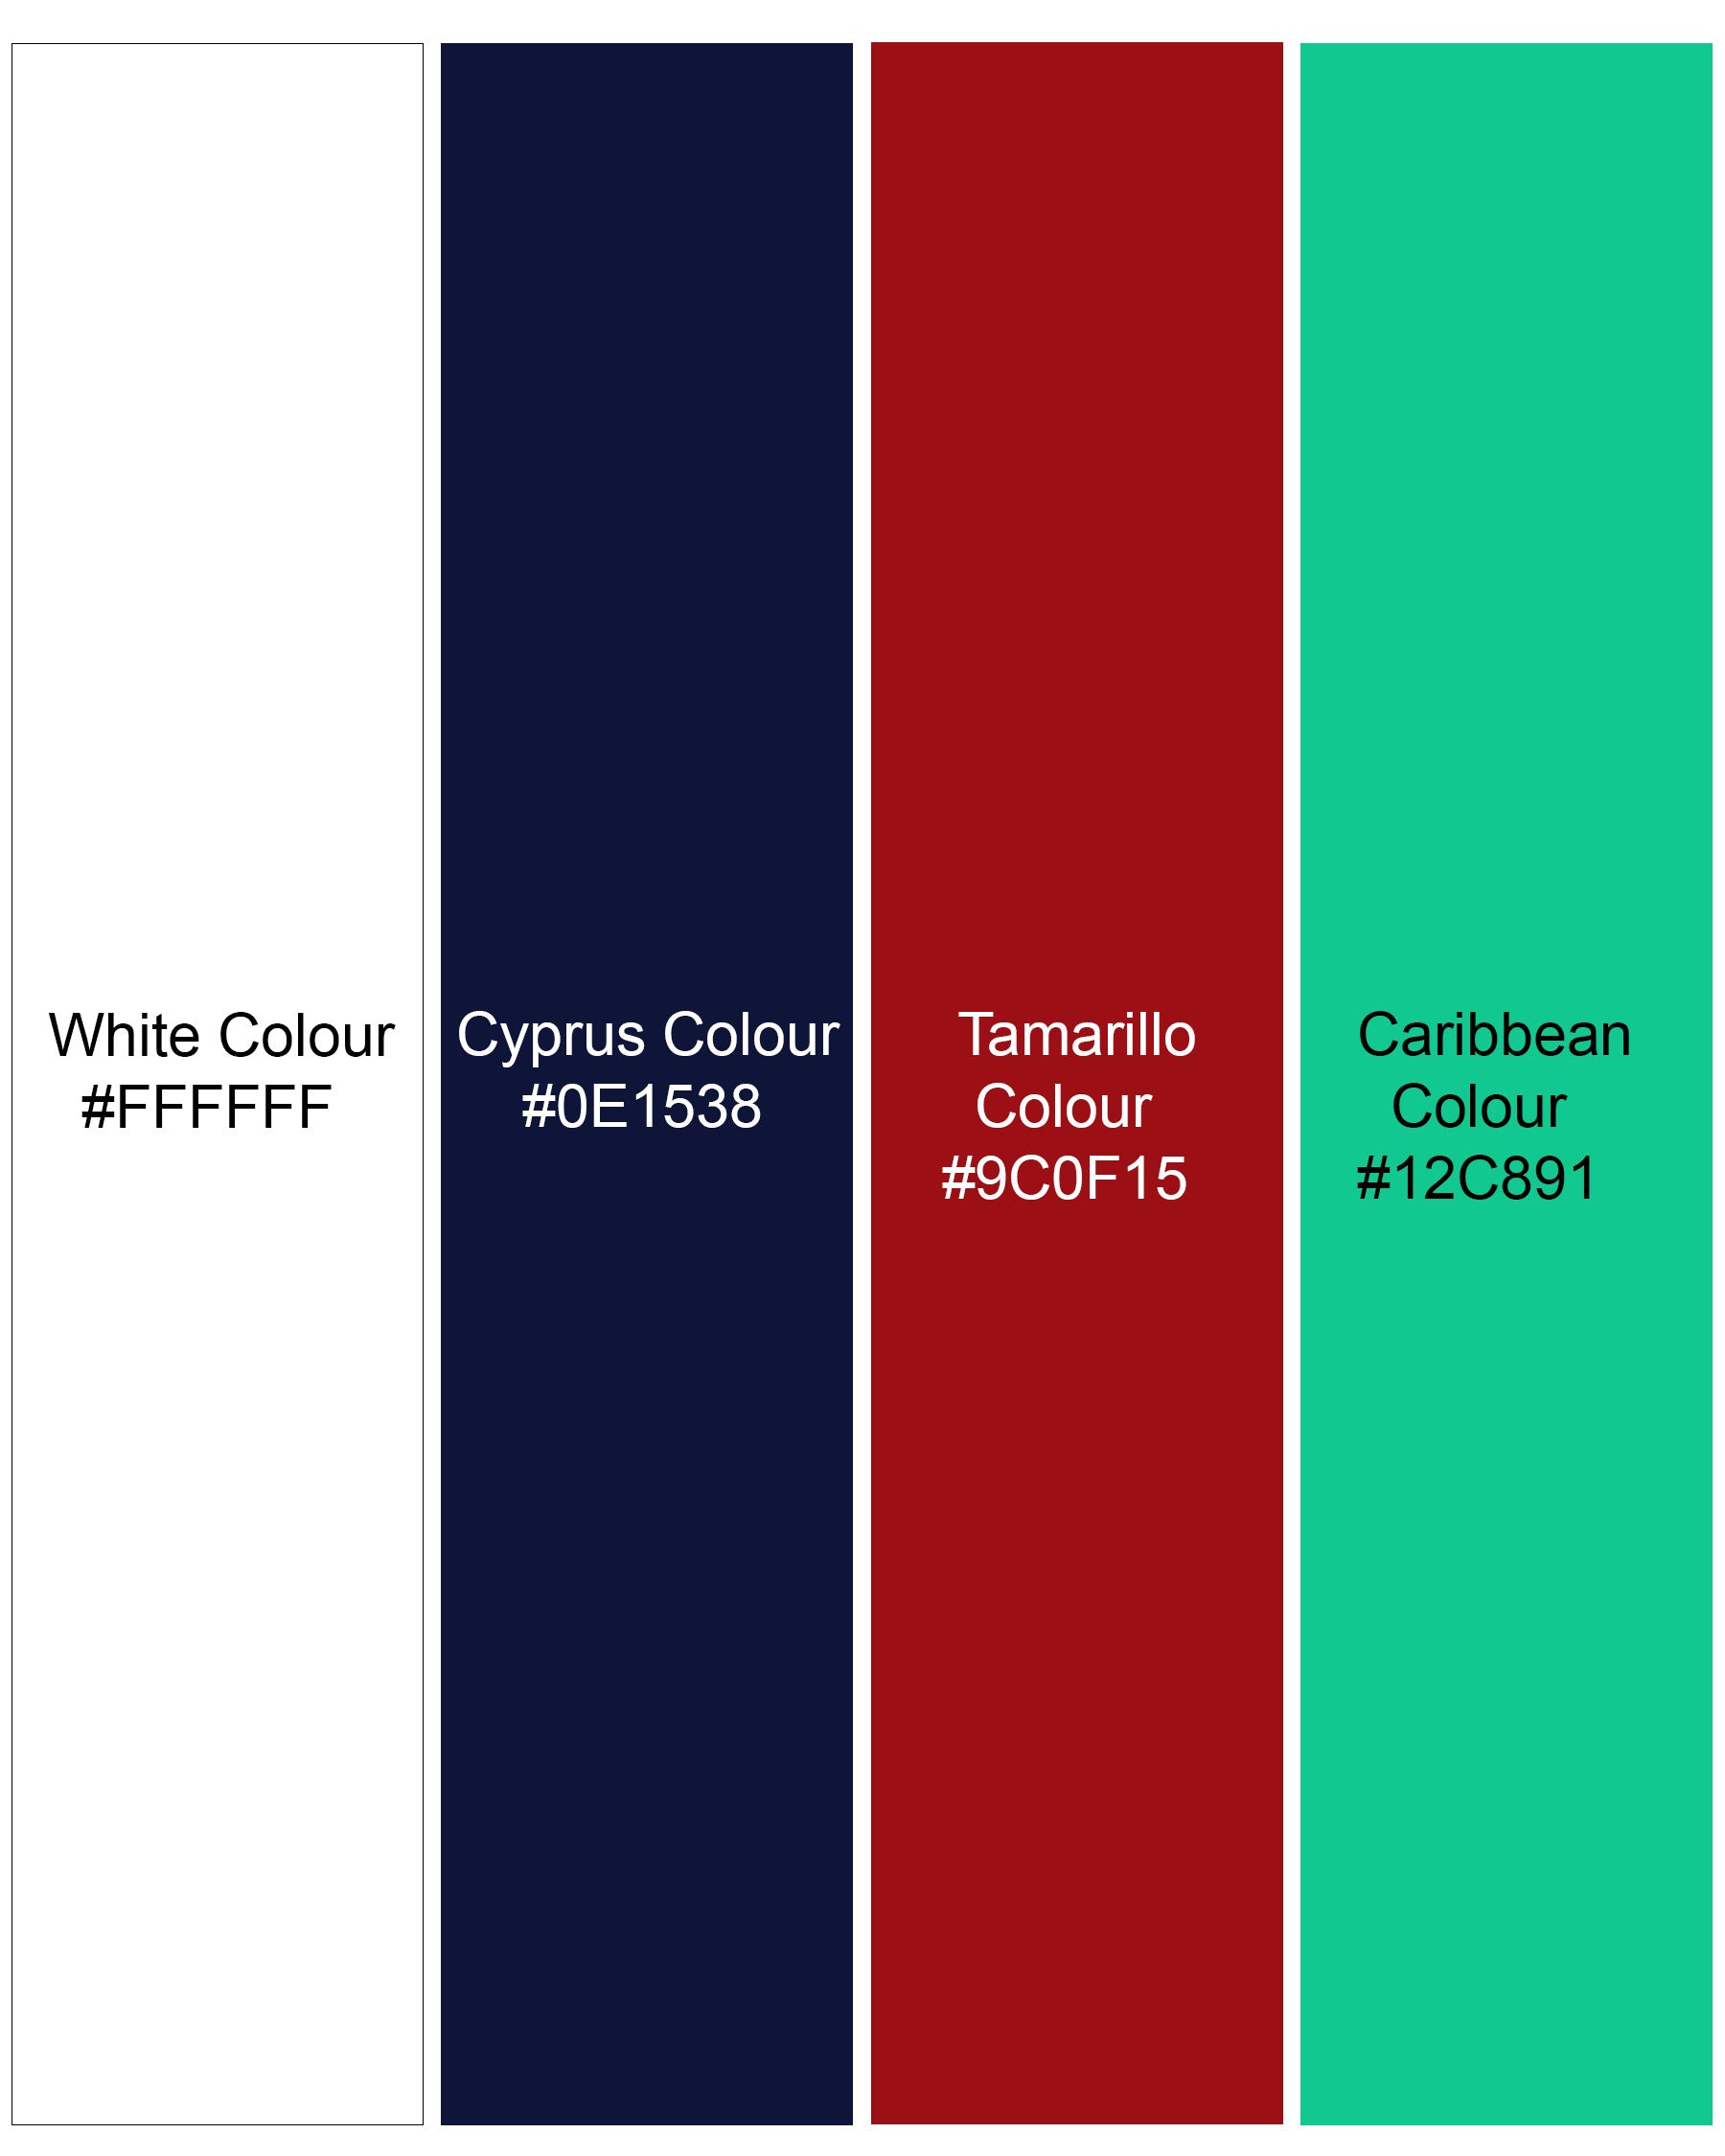 Bright White with Tamarillo Red and Caribbean Green Twill Windowpane Premium Cotton Shirt 8236-BD-MN-38,8236-BD-MN-H-38,8236-BD-MN-39,8236-BD-MN-H-39,8236-BD-MN-40,8236-BD-MN-H-40,8236-BD-MN-42,8236-BD-MN-H-42,8236-BD-MN-44,8236-BD-MN-H-44,8236-BD-MN-46,8236-BD-MN-H-46,8236-BD-MN-48,8236-BD-MN-H-48,8236-BD-MN-50,8236-BD-MN-H-50,8236-BD-MN-52,8236-BD-MN-H-52